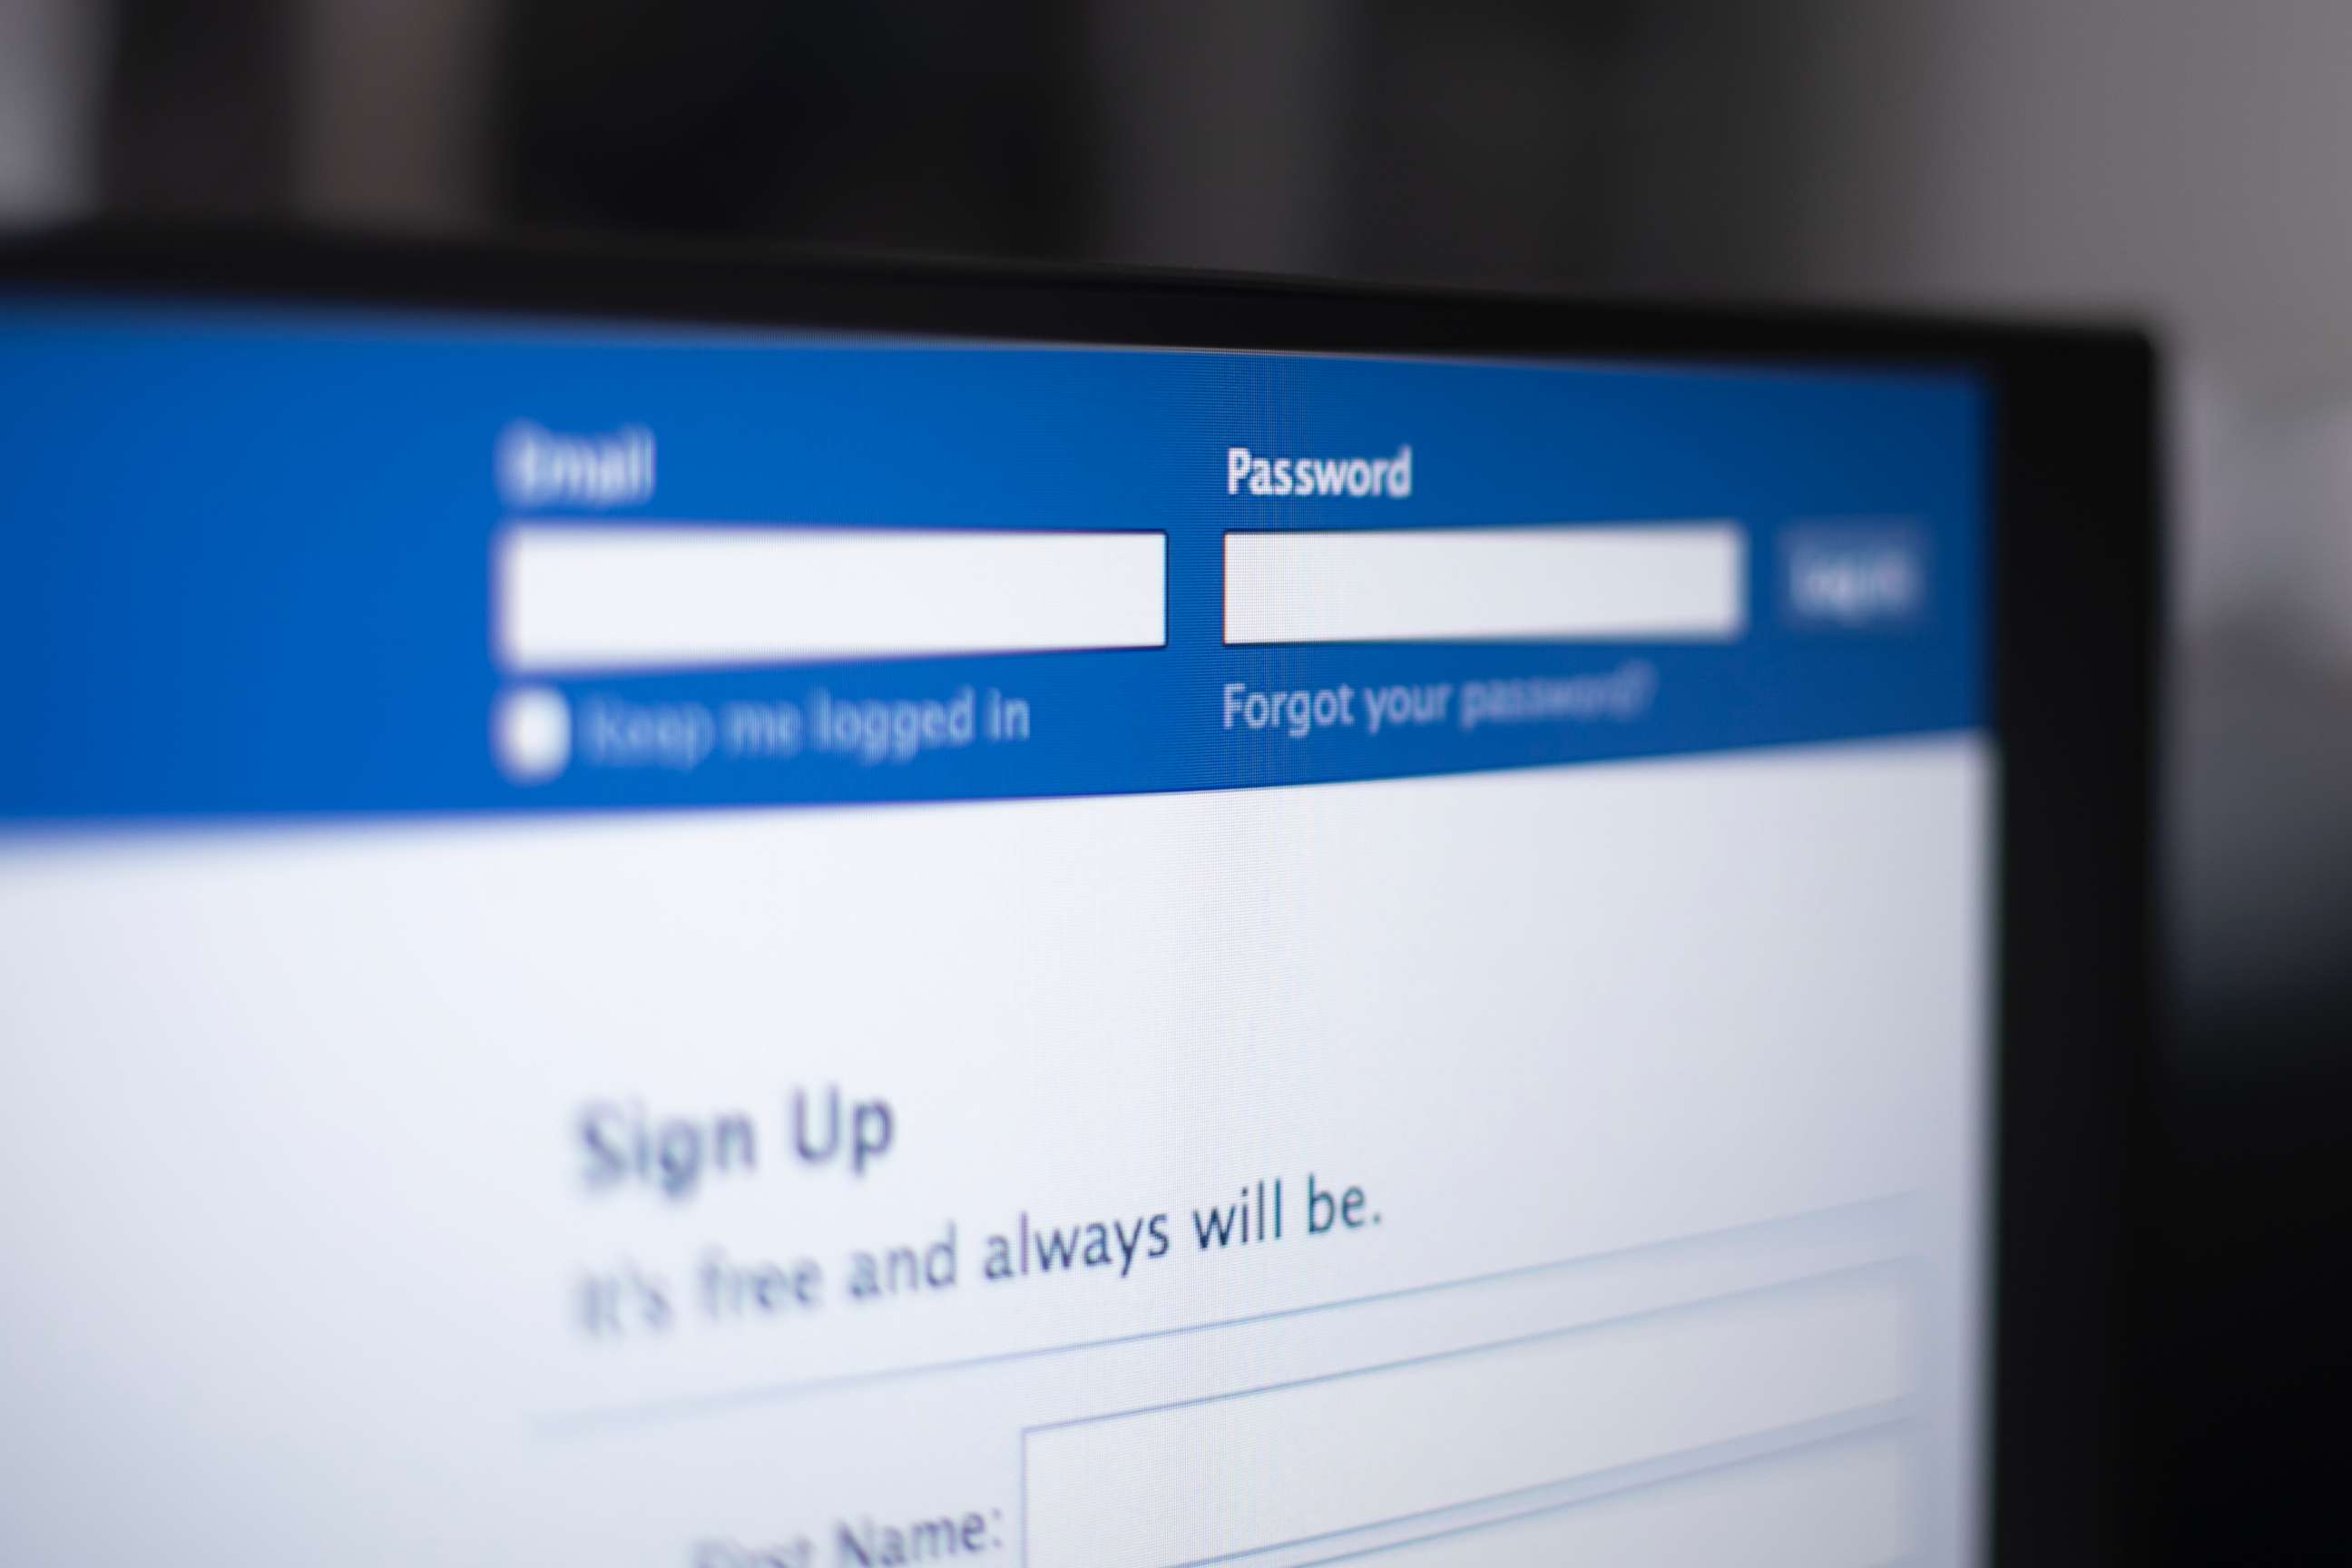 Facebook Login Users Need to Update Passwords